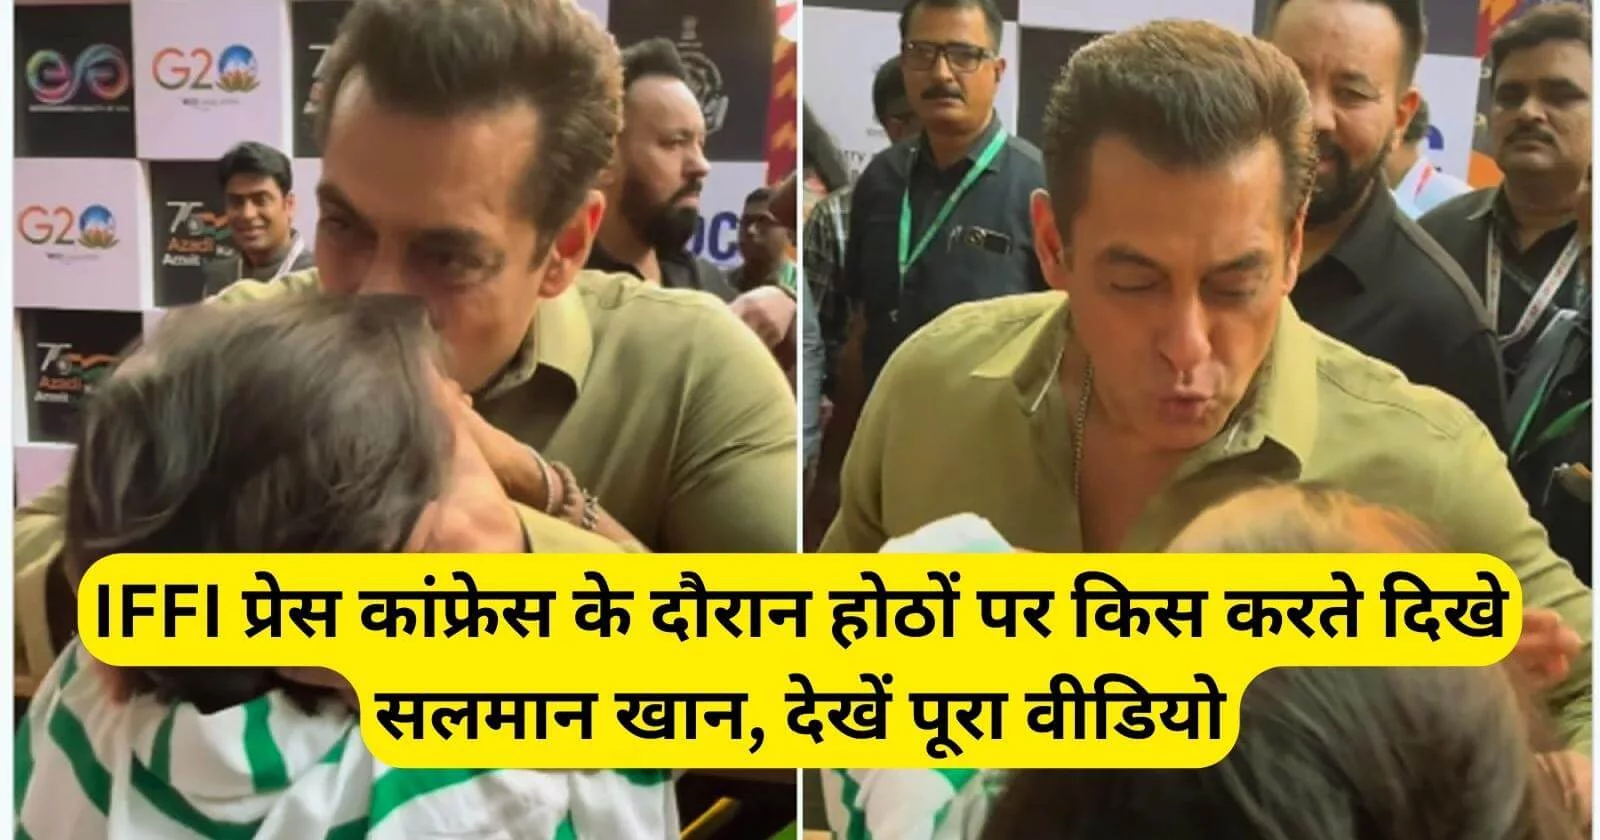 Salman Khan Kiss Video Goes Viral